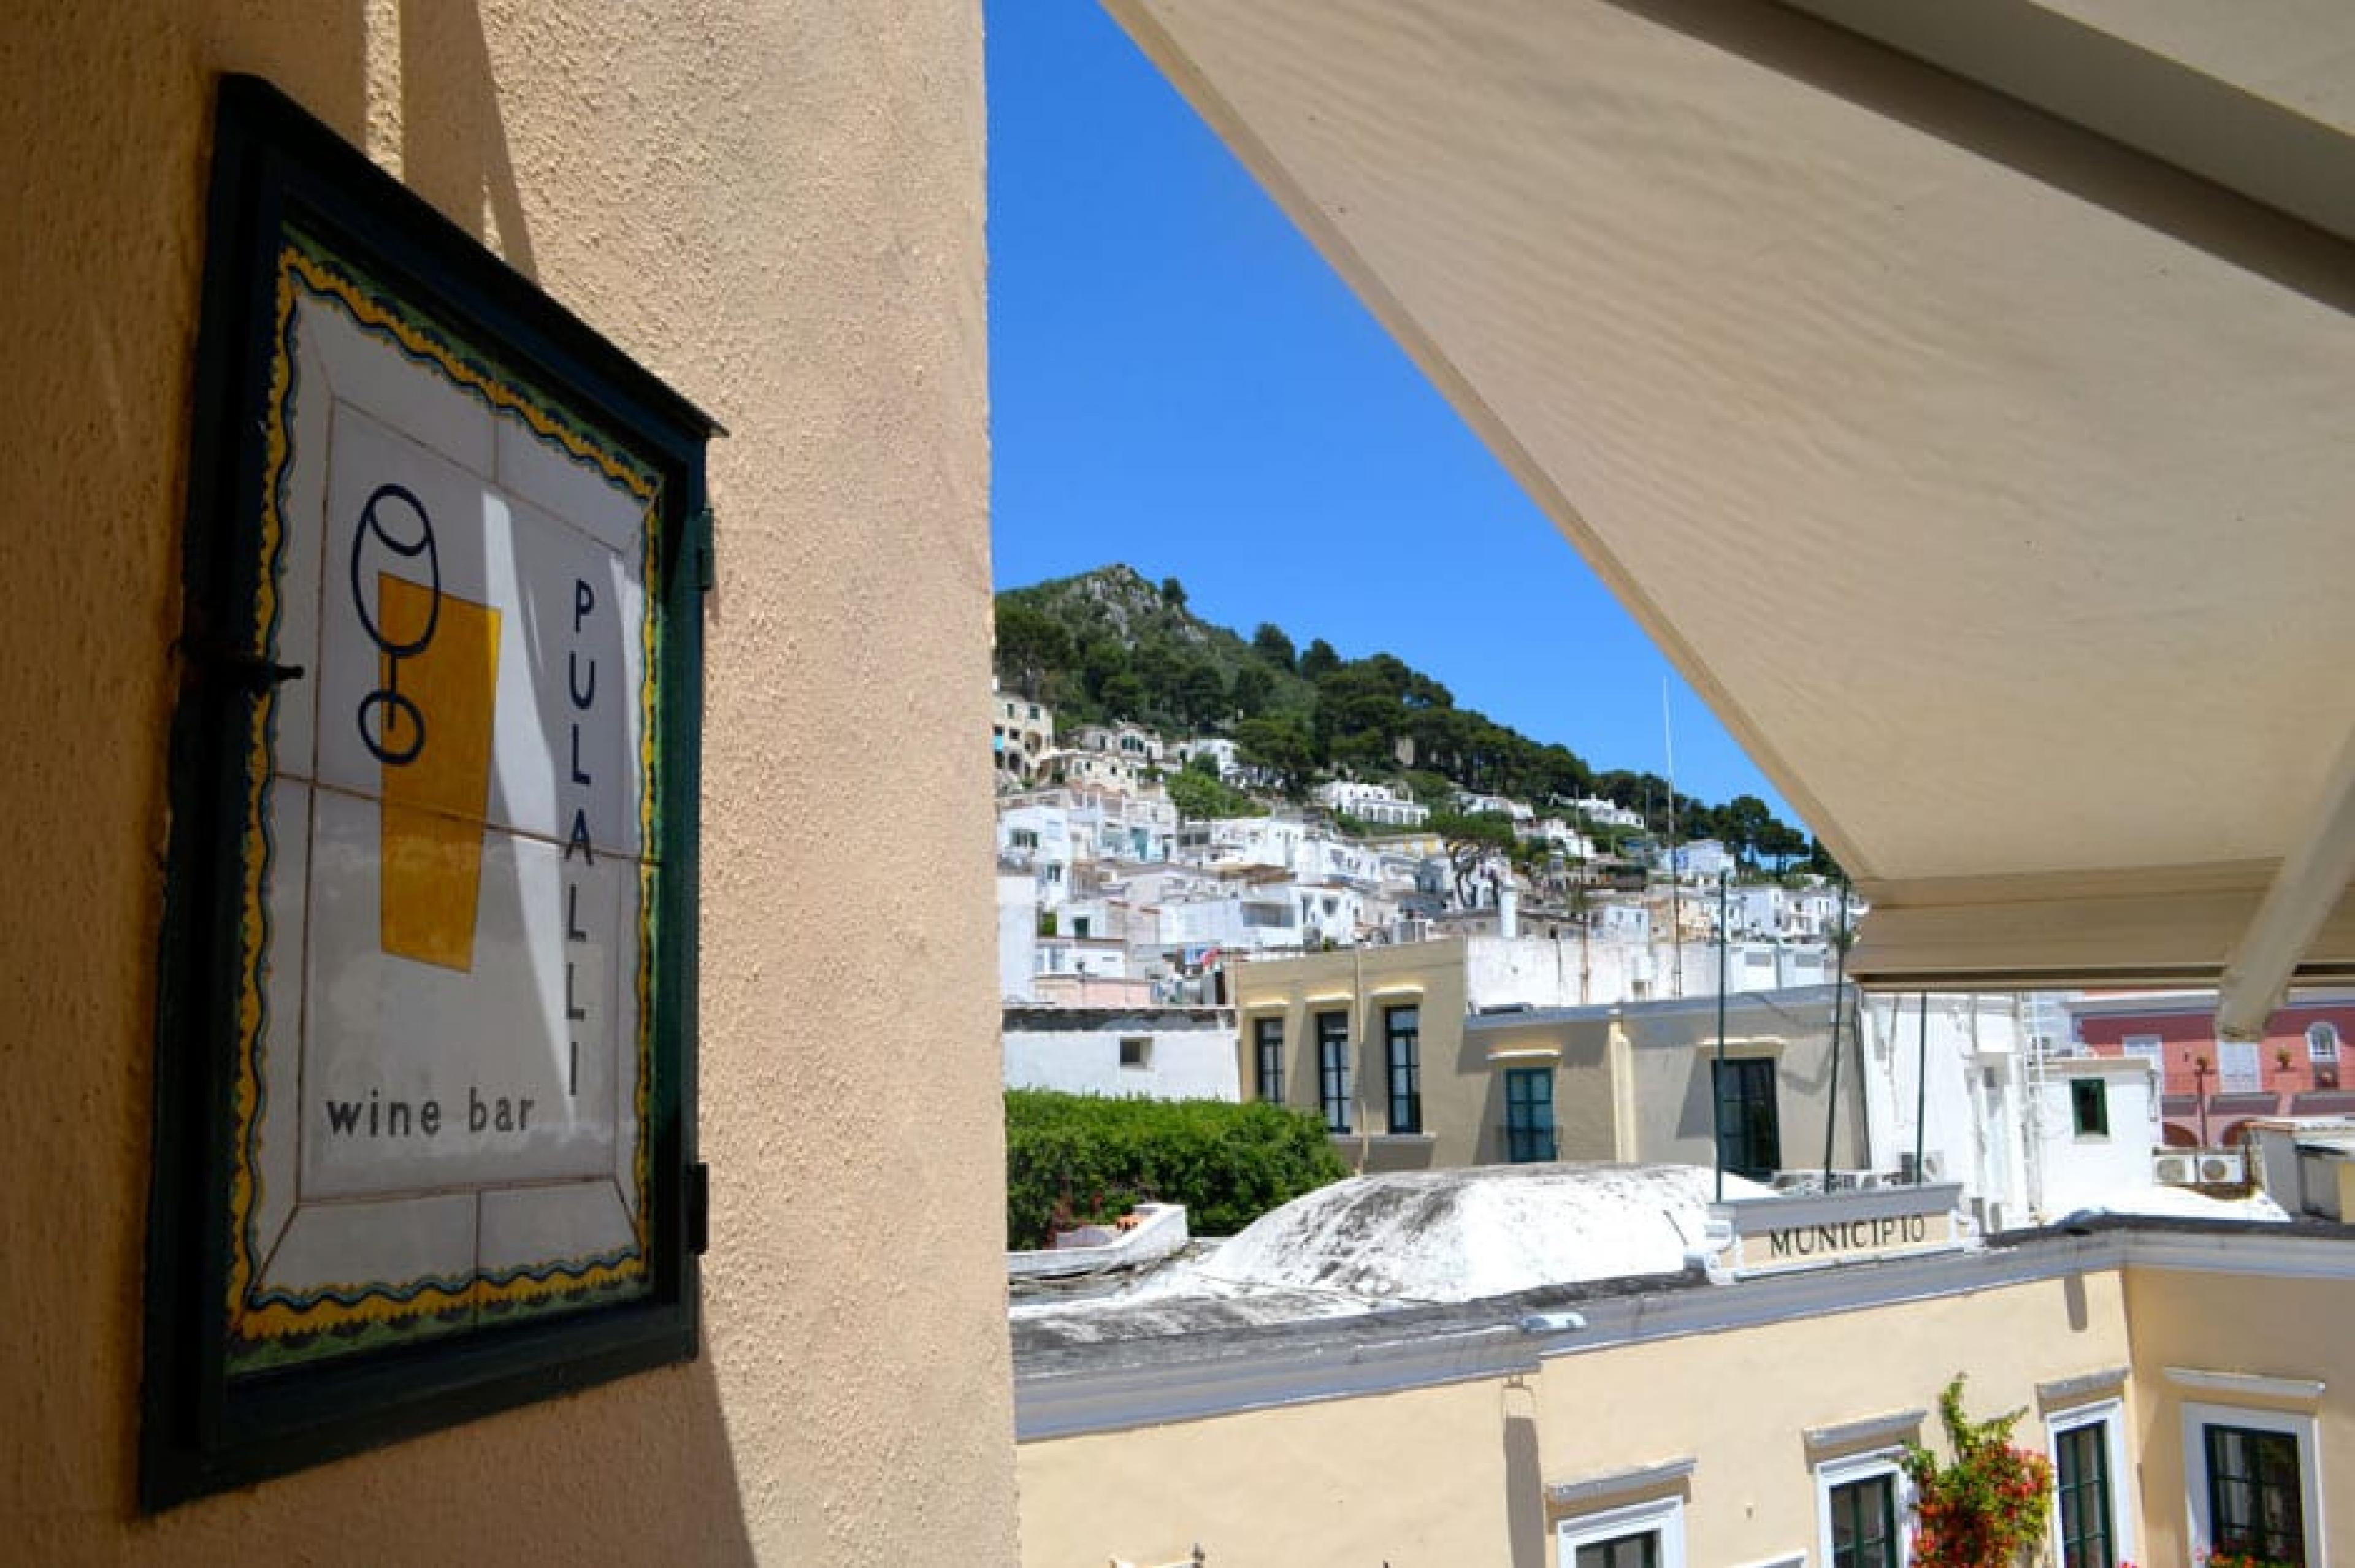 Exterior View : Pulalli Wine Bar, Capri, Italy